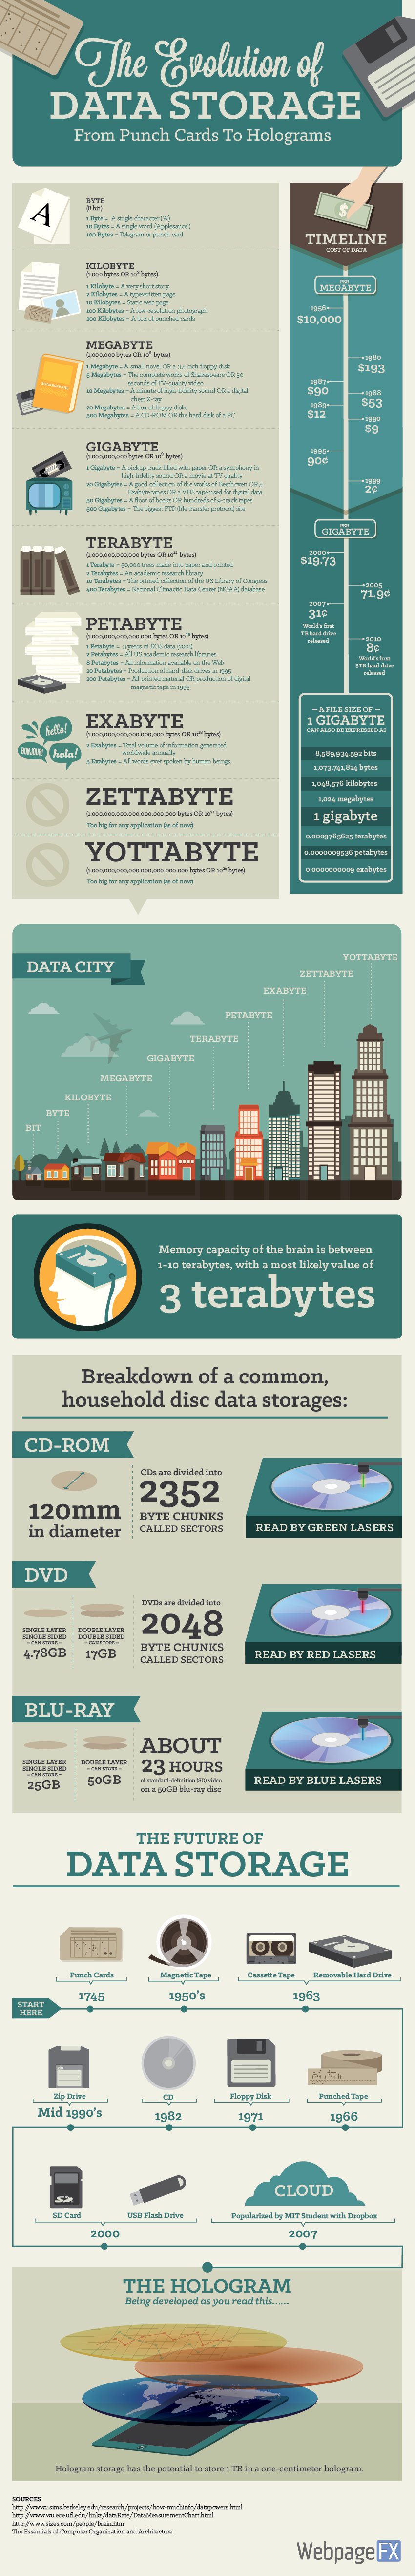 data-storage-infographic